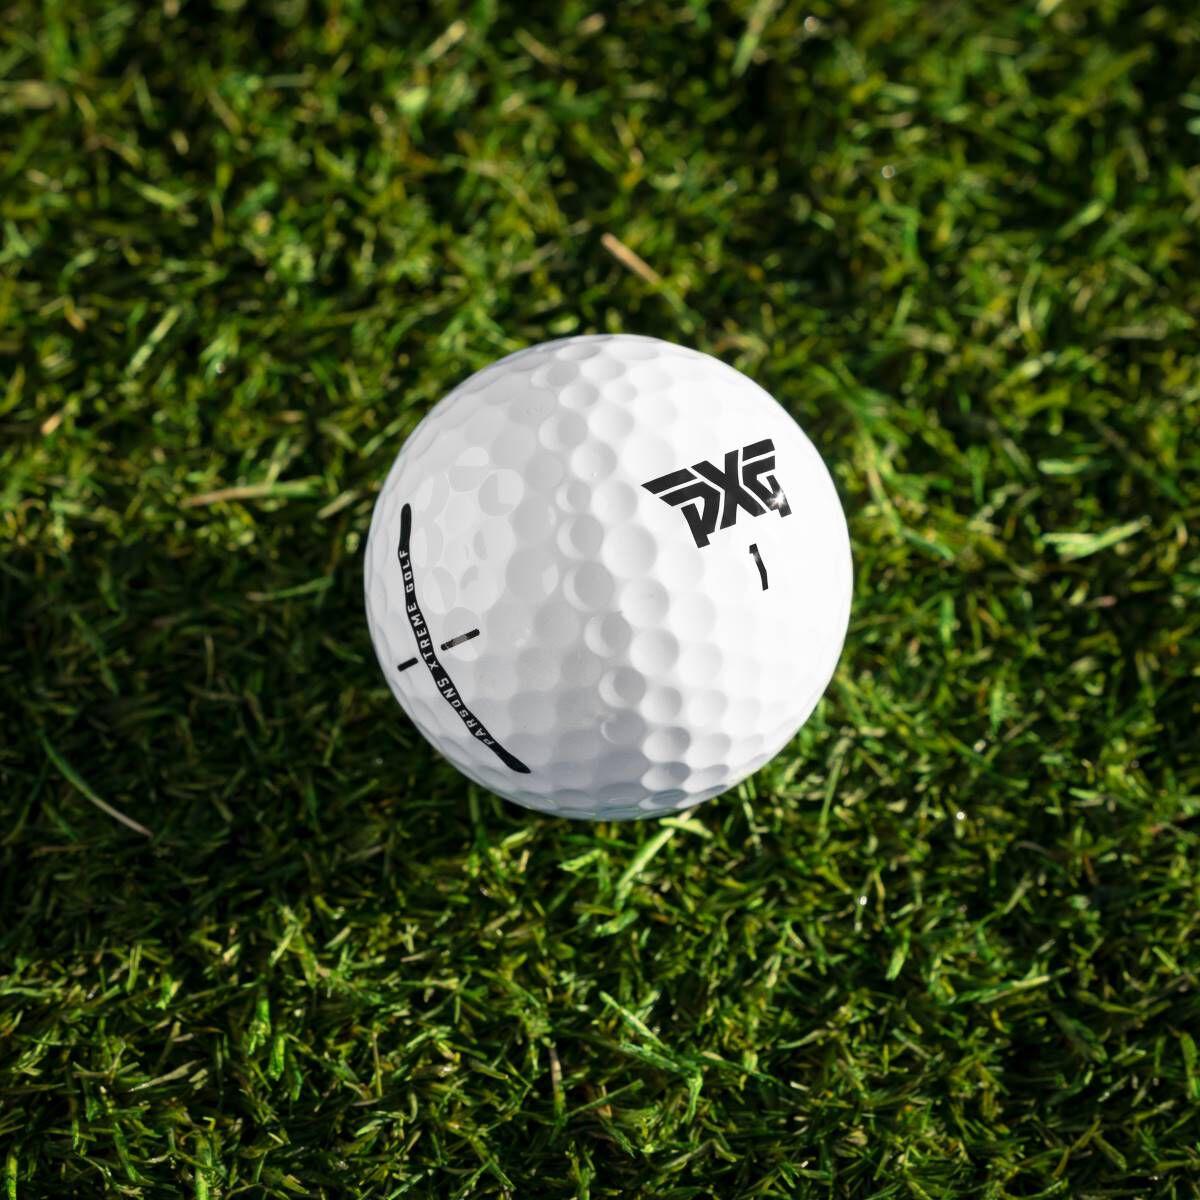 NEW PXG Xtreme Premium Golf Balls | Golf Balls | PXG Xtreme 